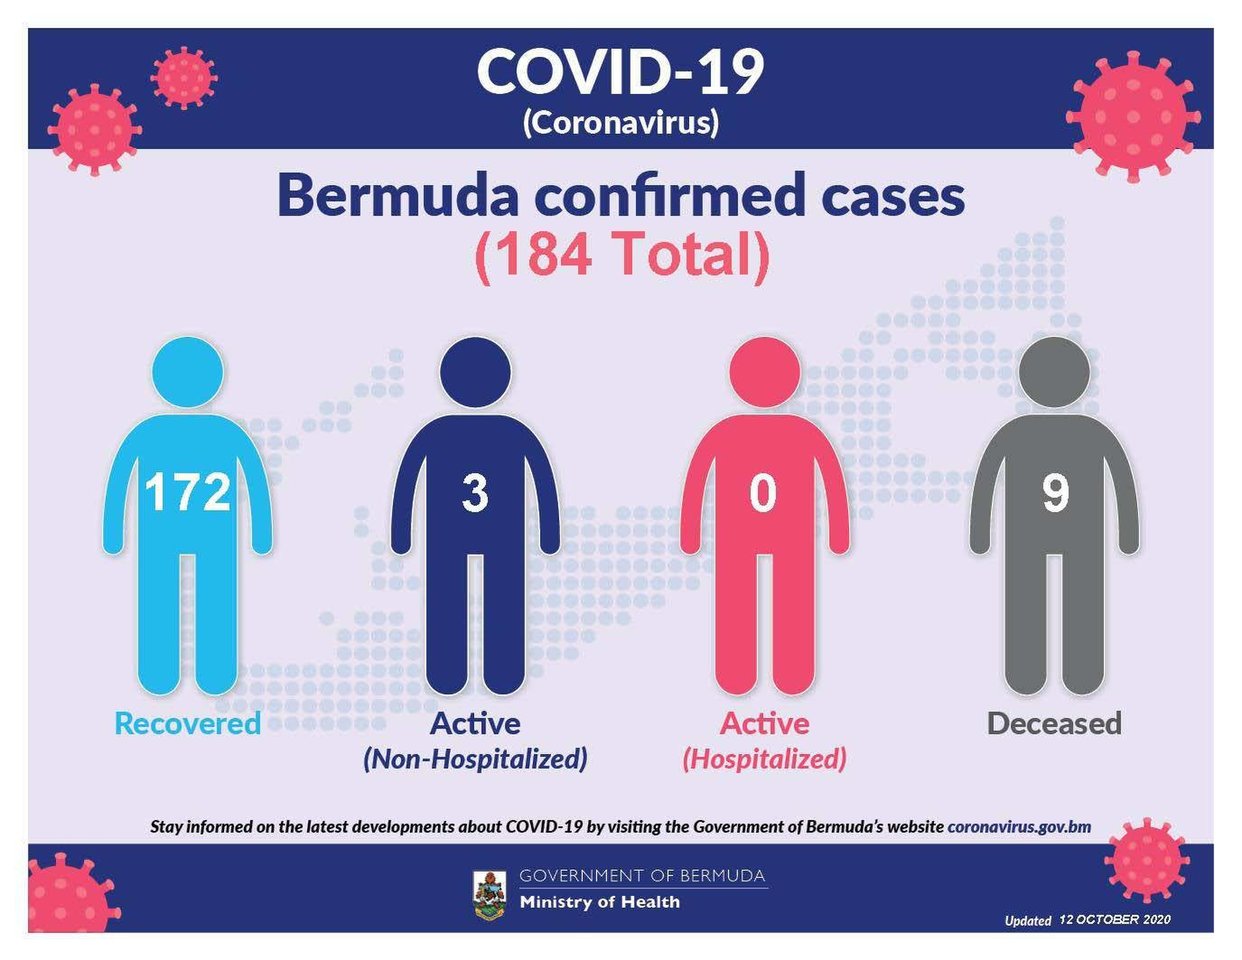 No new COVID-19 cases reported in Bermuda, 12 October